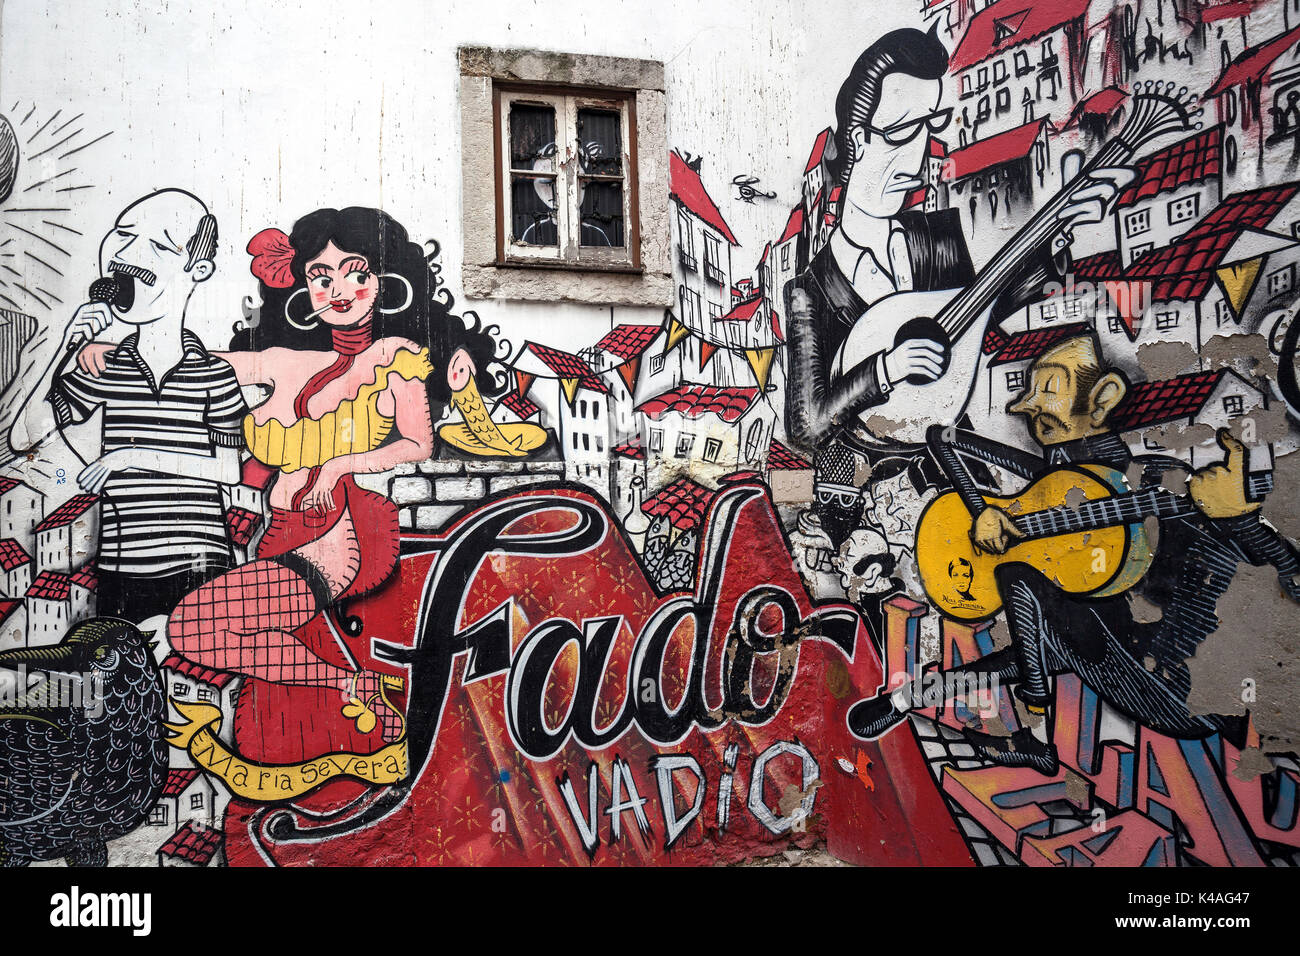 Wall painting, street art, graffiti, Escadinhas de São Cristóvão, old town, Lisbon, Portugal Stock Photo